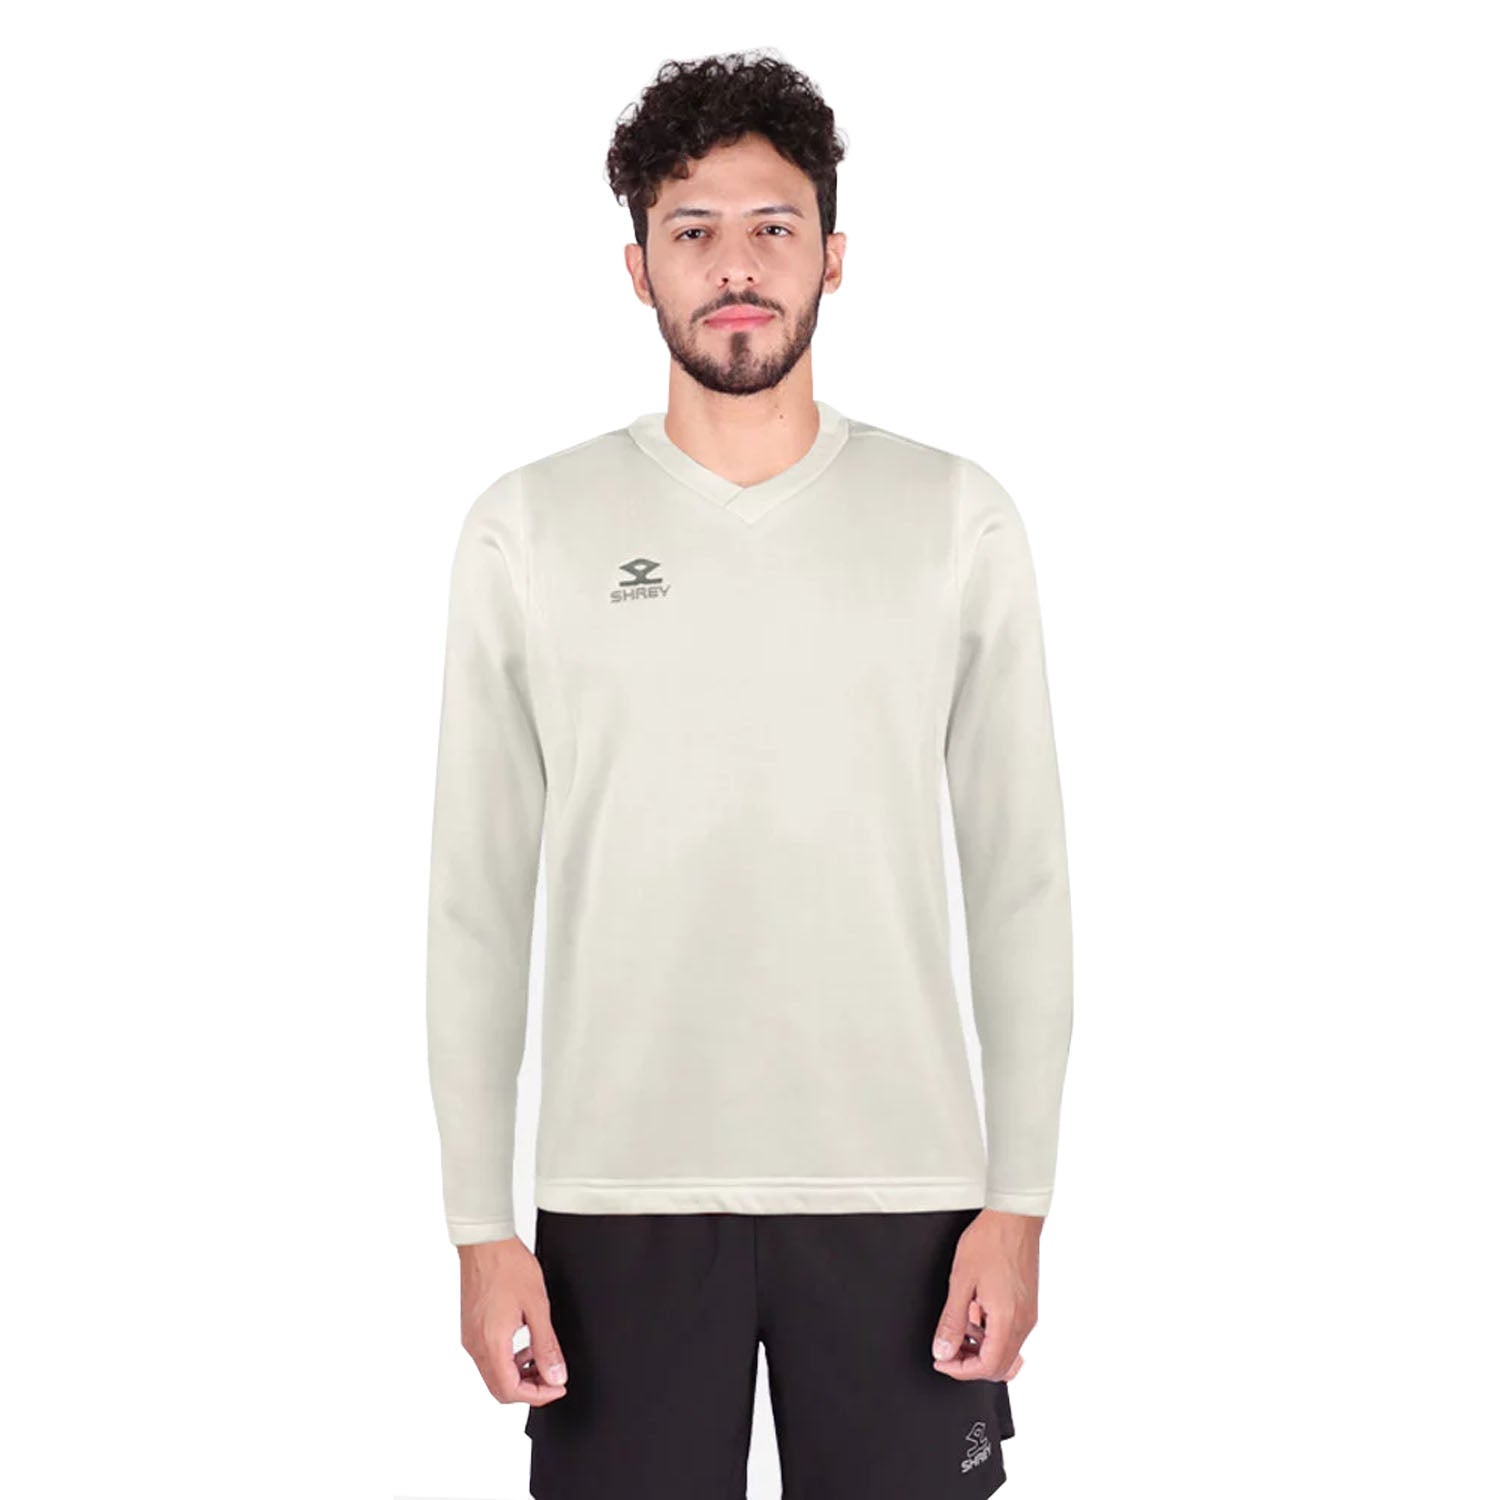 SHrey Match Long Sleeve Cricket Sweater, Off White - Best Price online Prokicksports.com